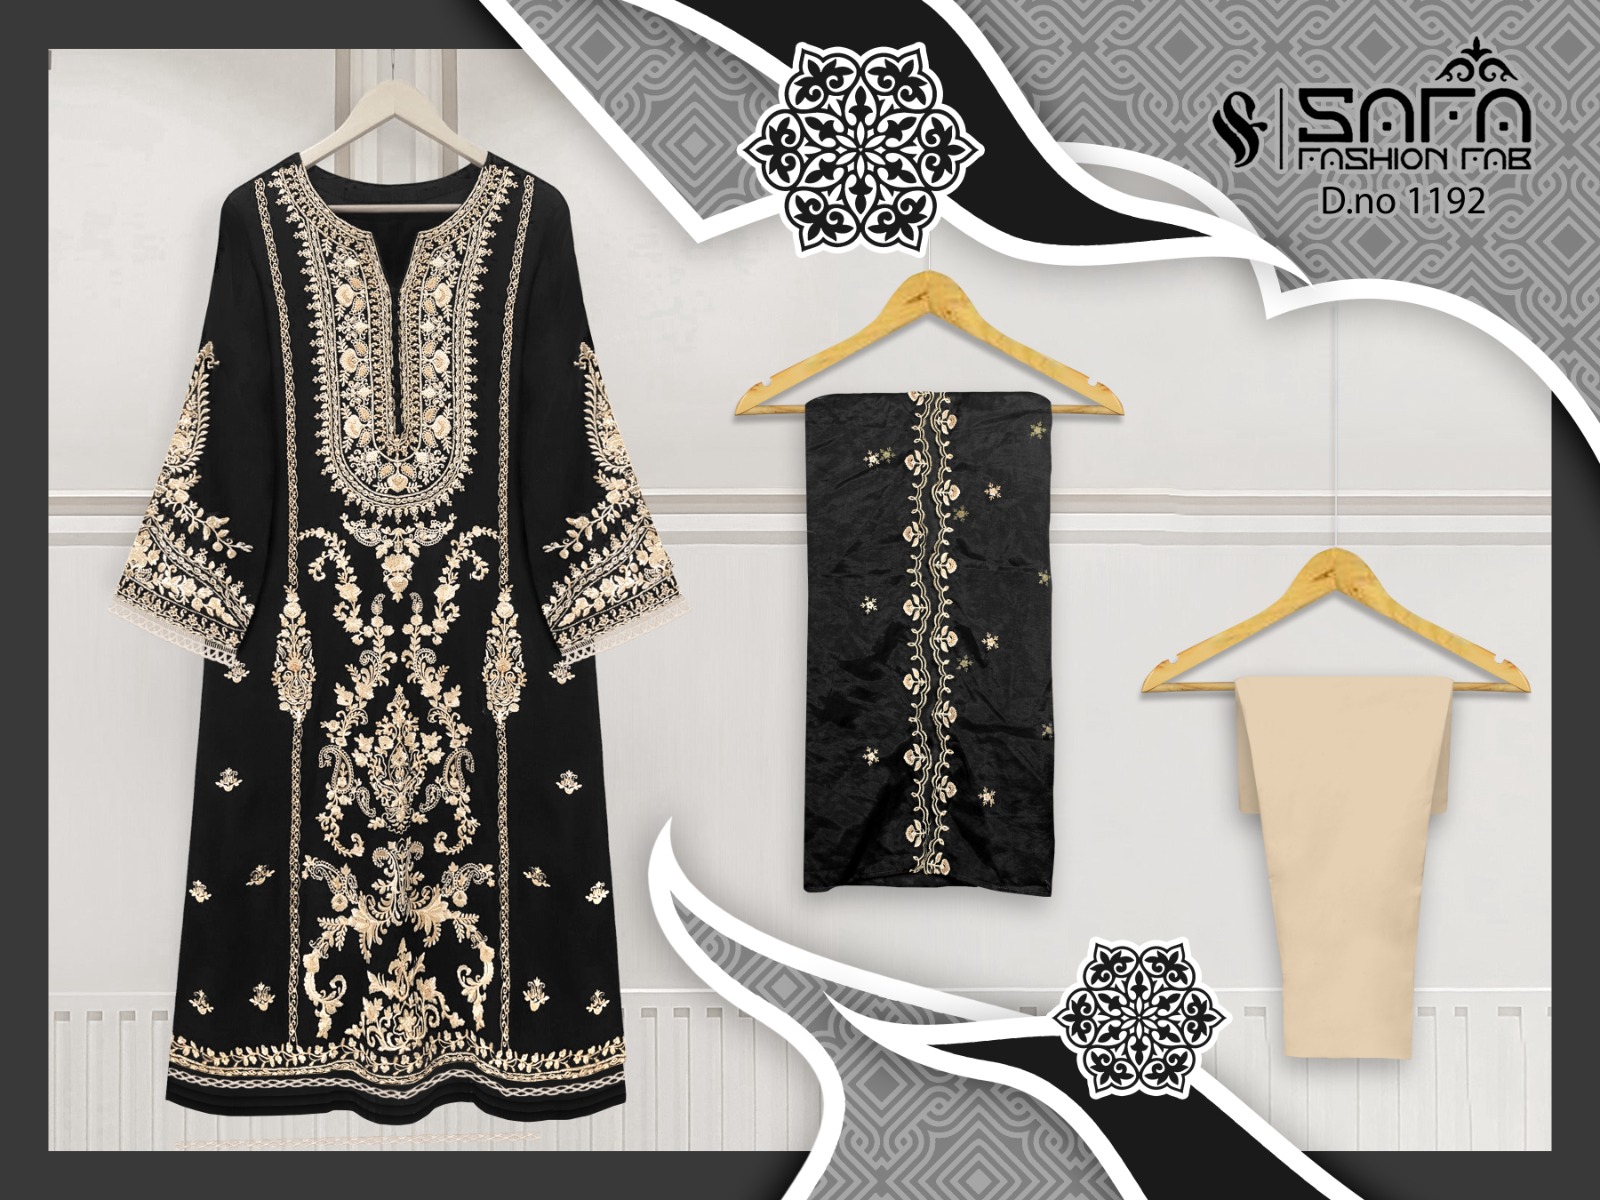 Safa Fashion Fab 1192 collection 4